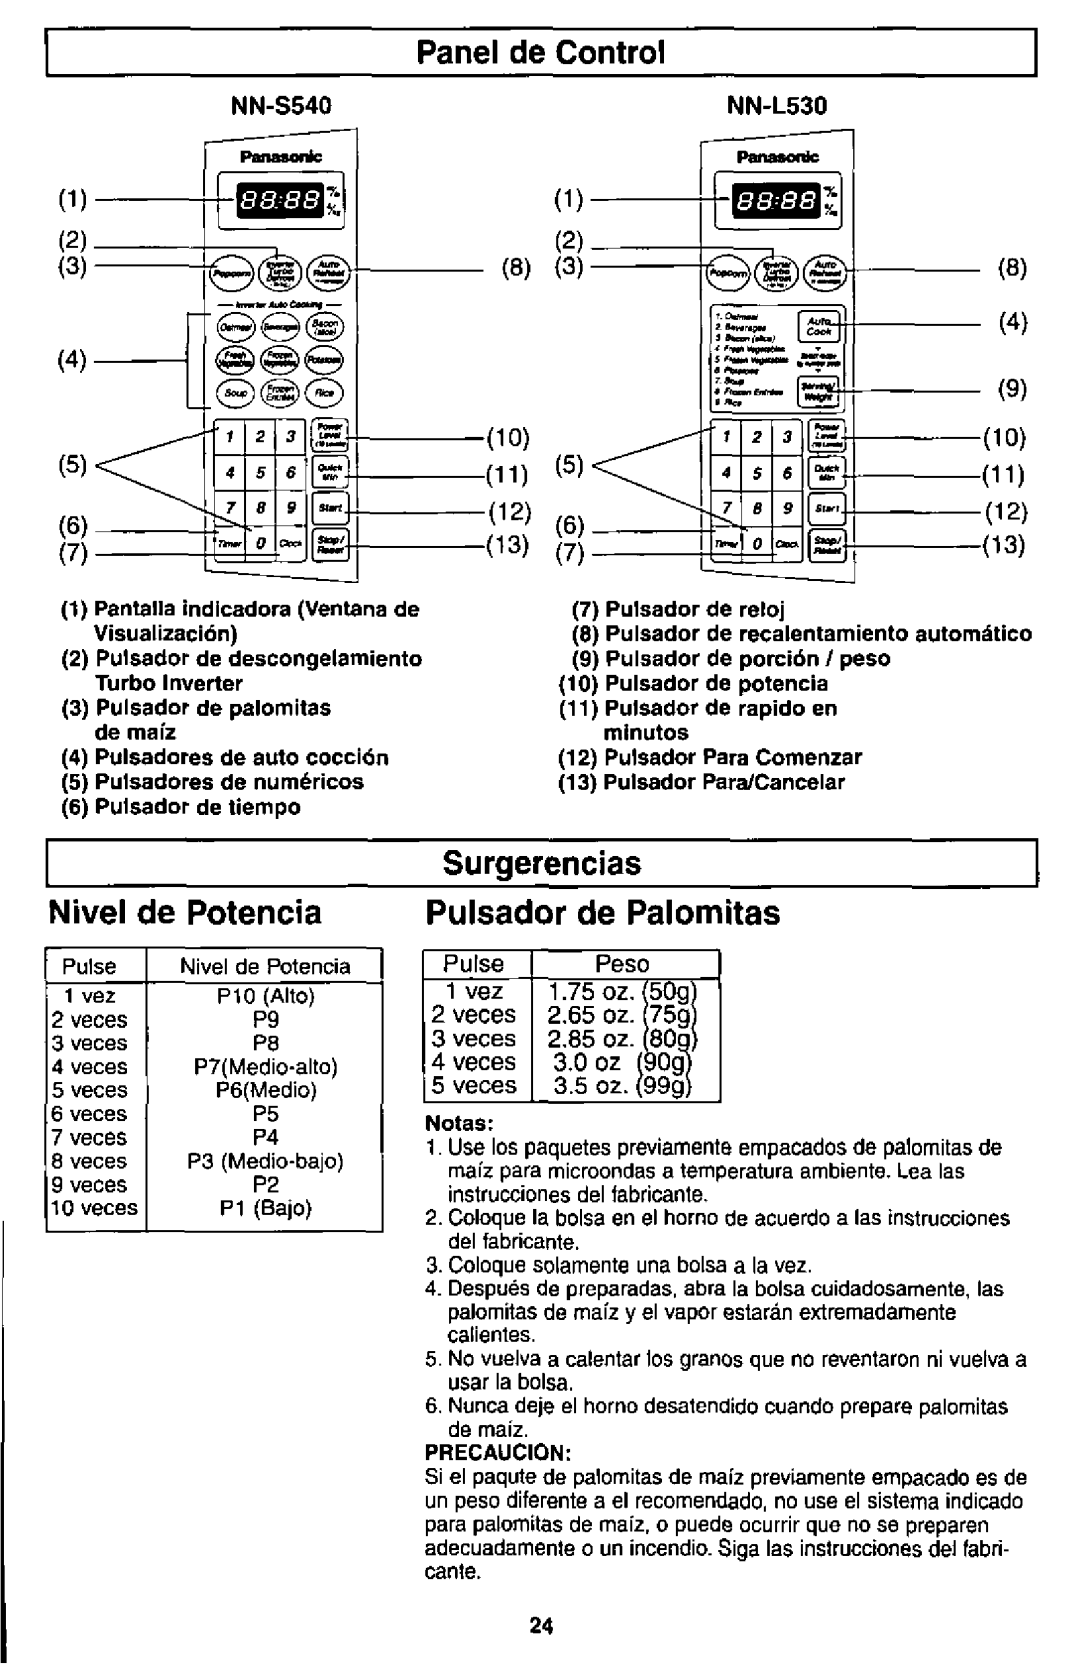 Panasonic NN-L530, NNS540 manual 